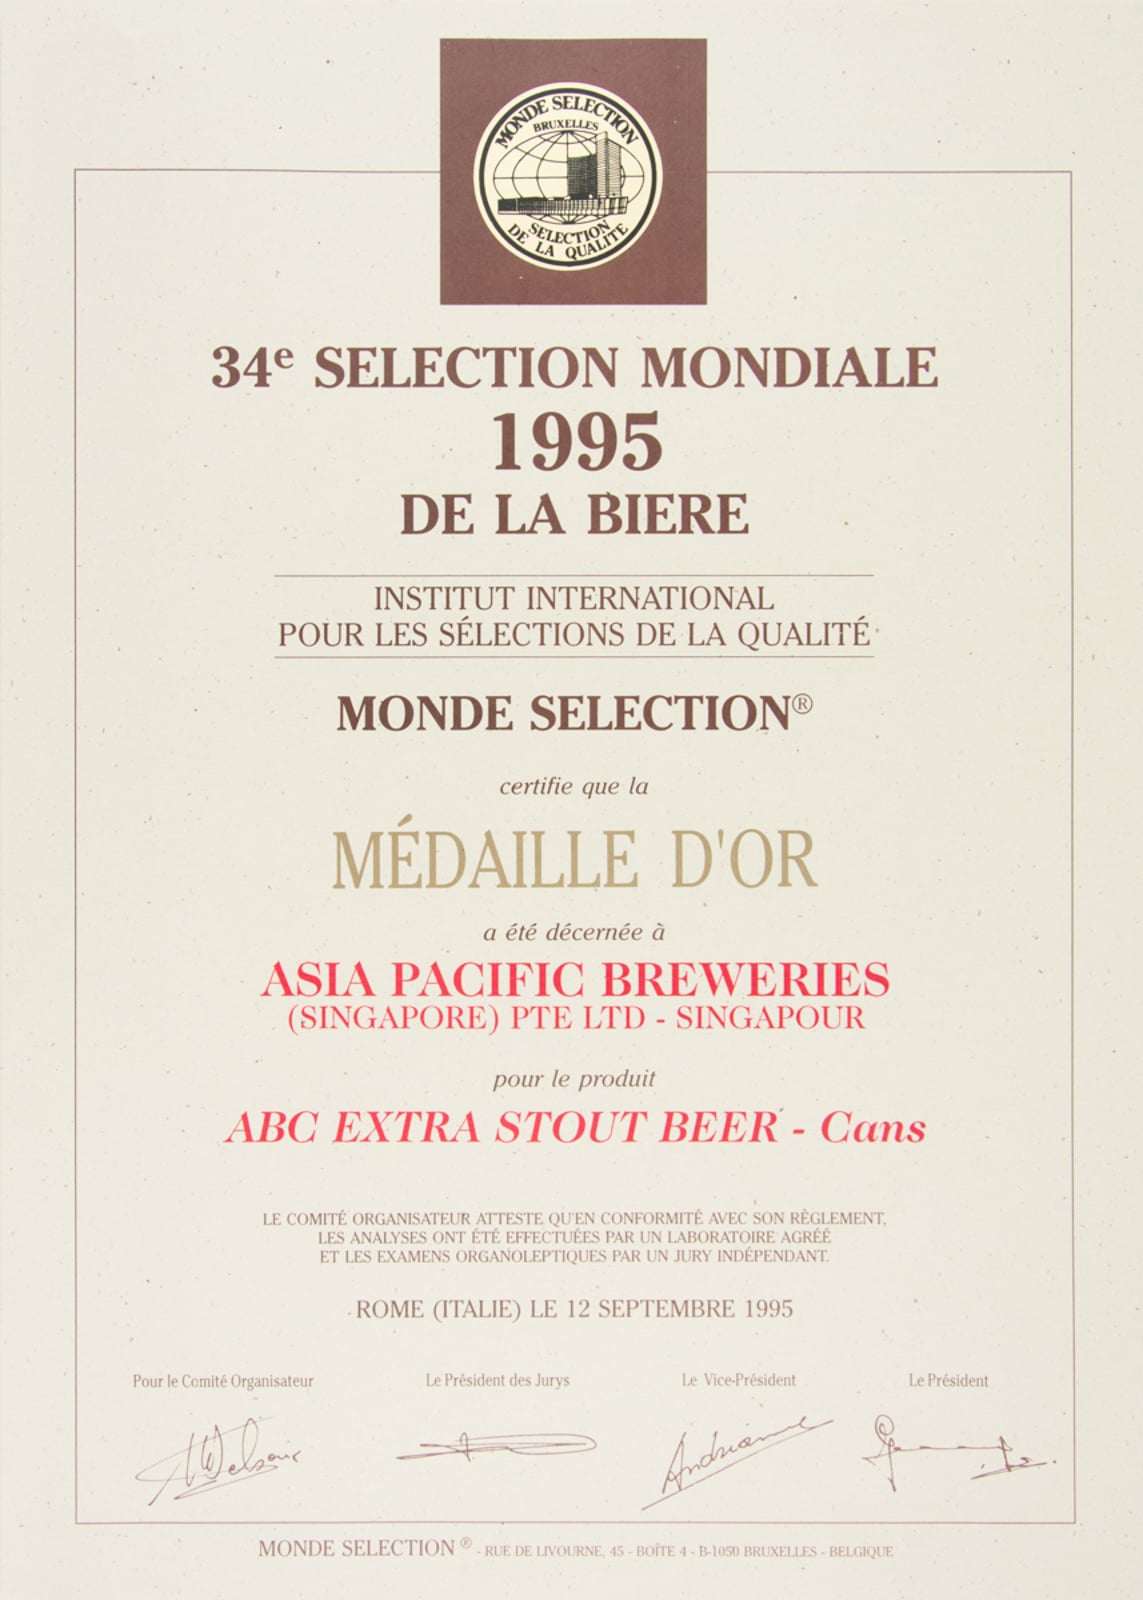 ABC Extra Stout Beer - Cans - Médaille d'Or, Monde Sélection Certificate 1995